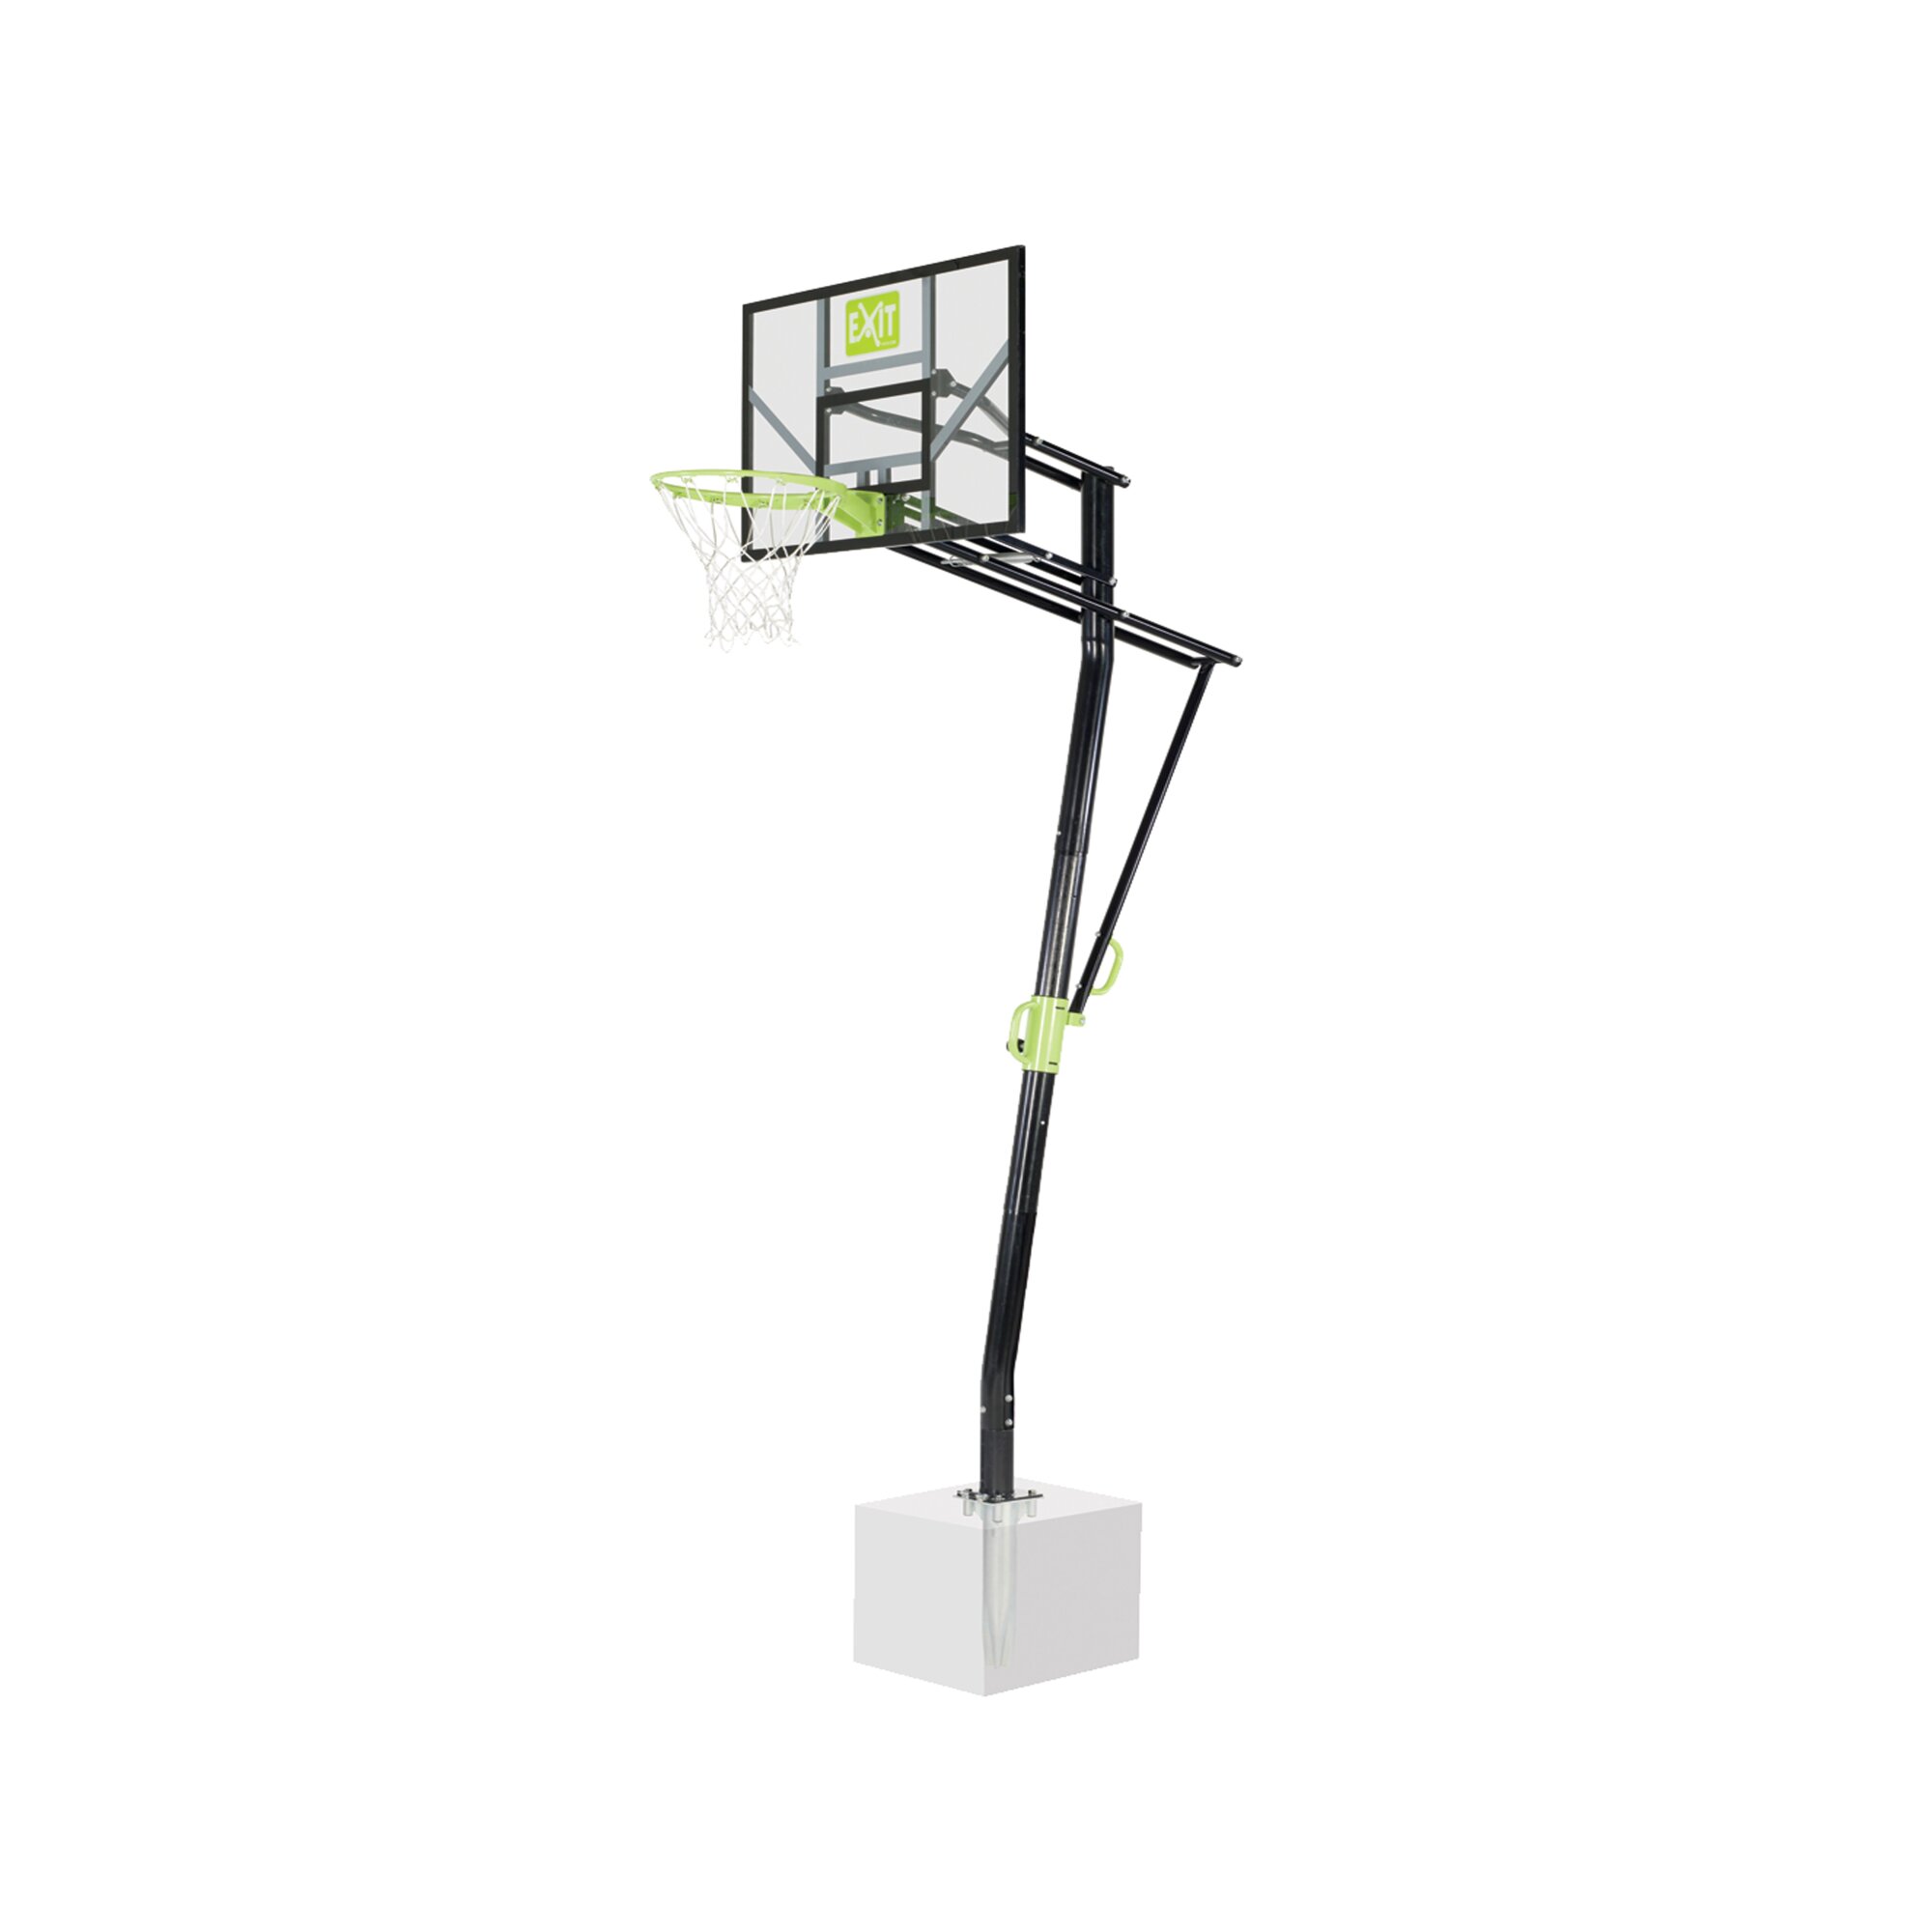 Exit Galaxy Basketballkorb grün-schwarz Bodenmontage Main